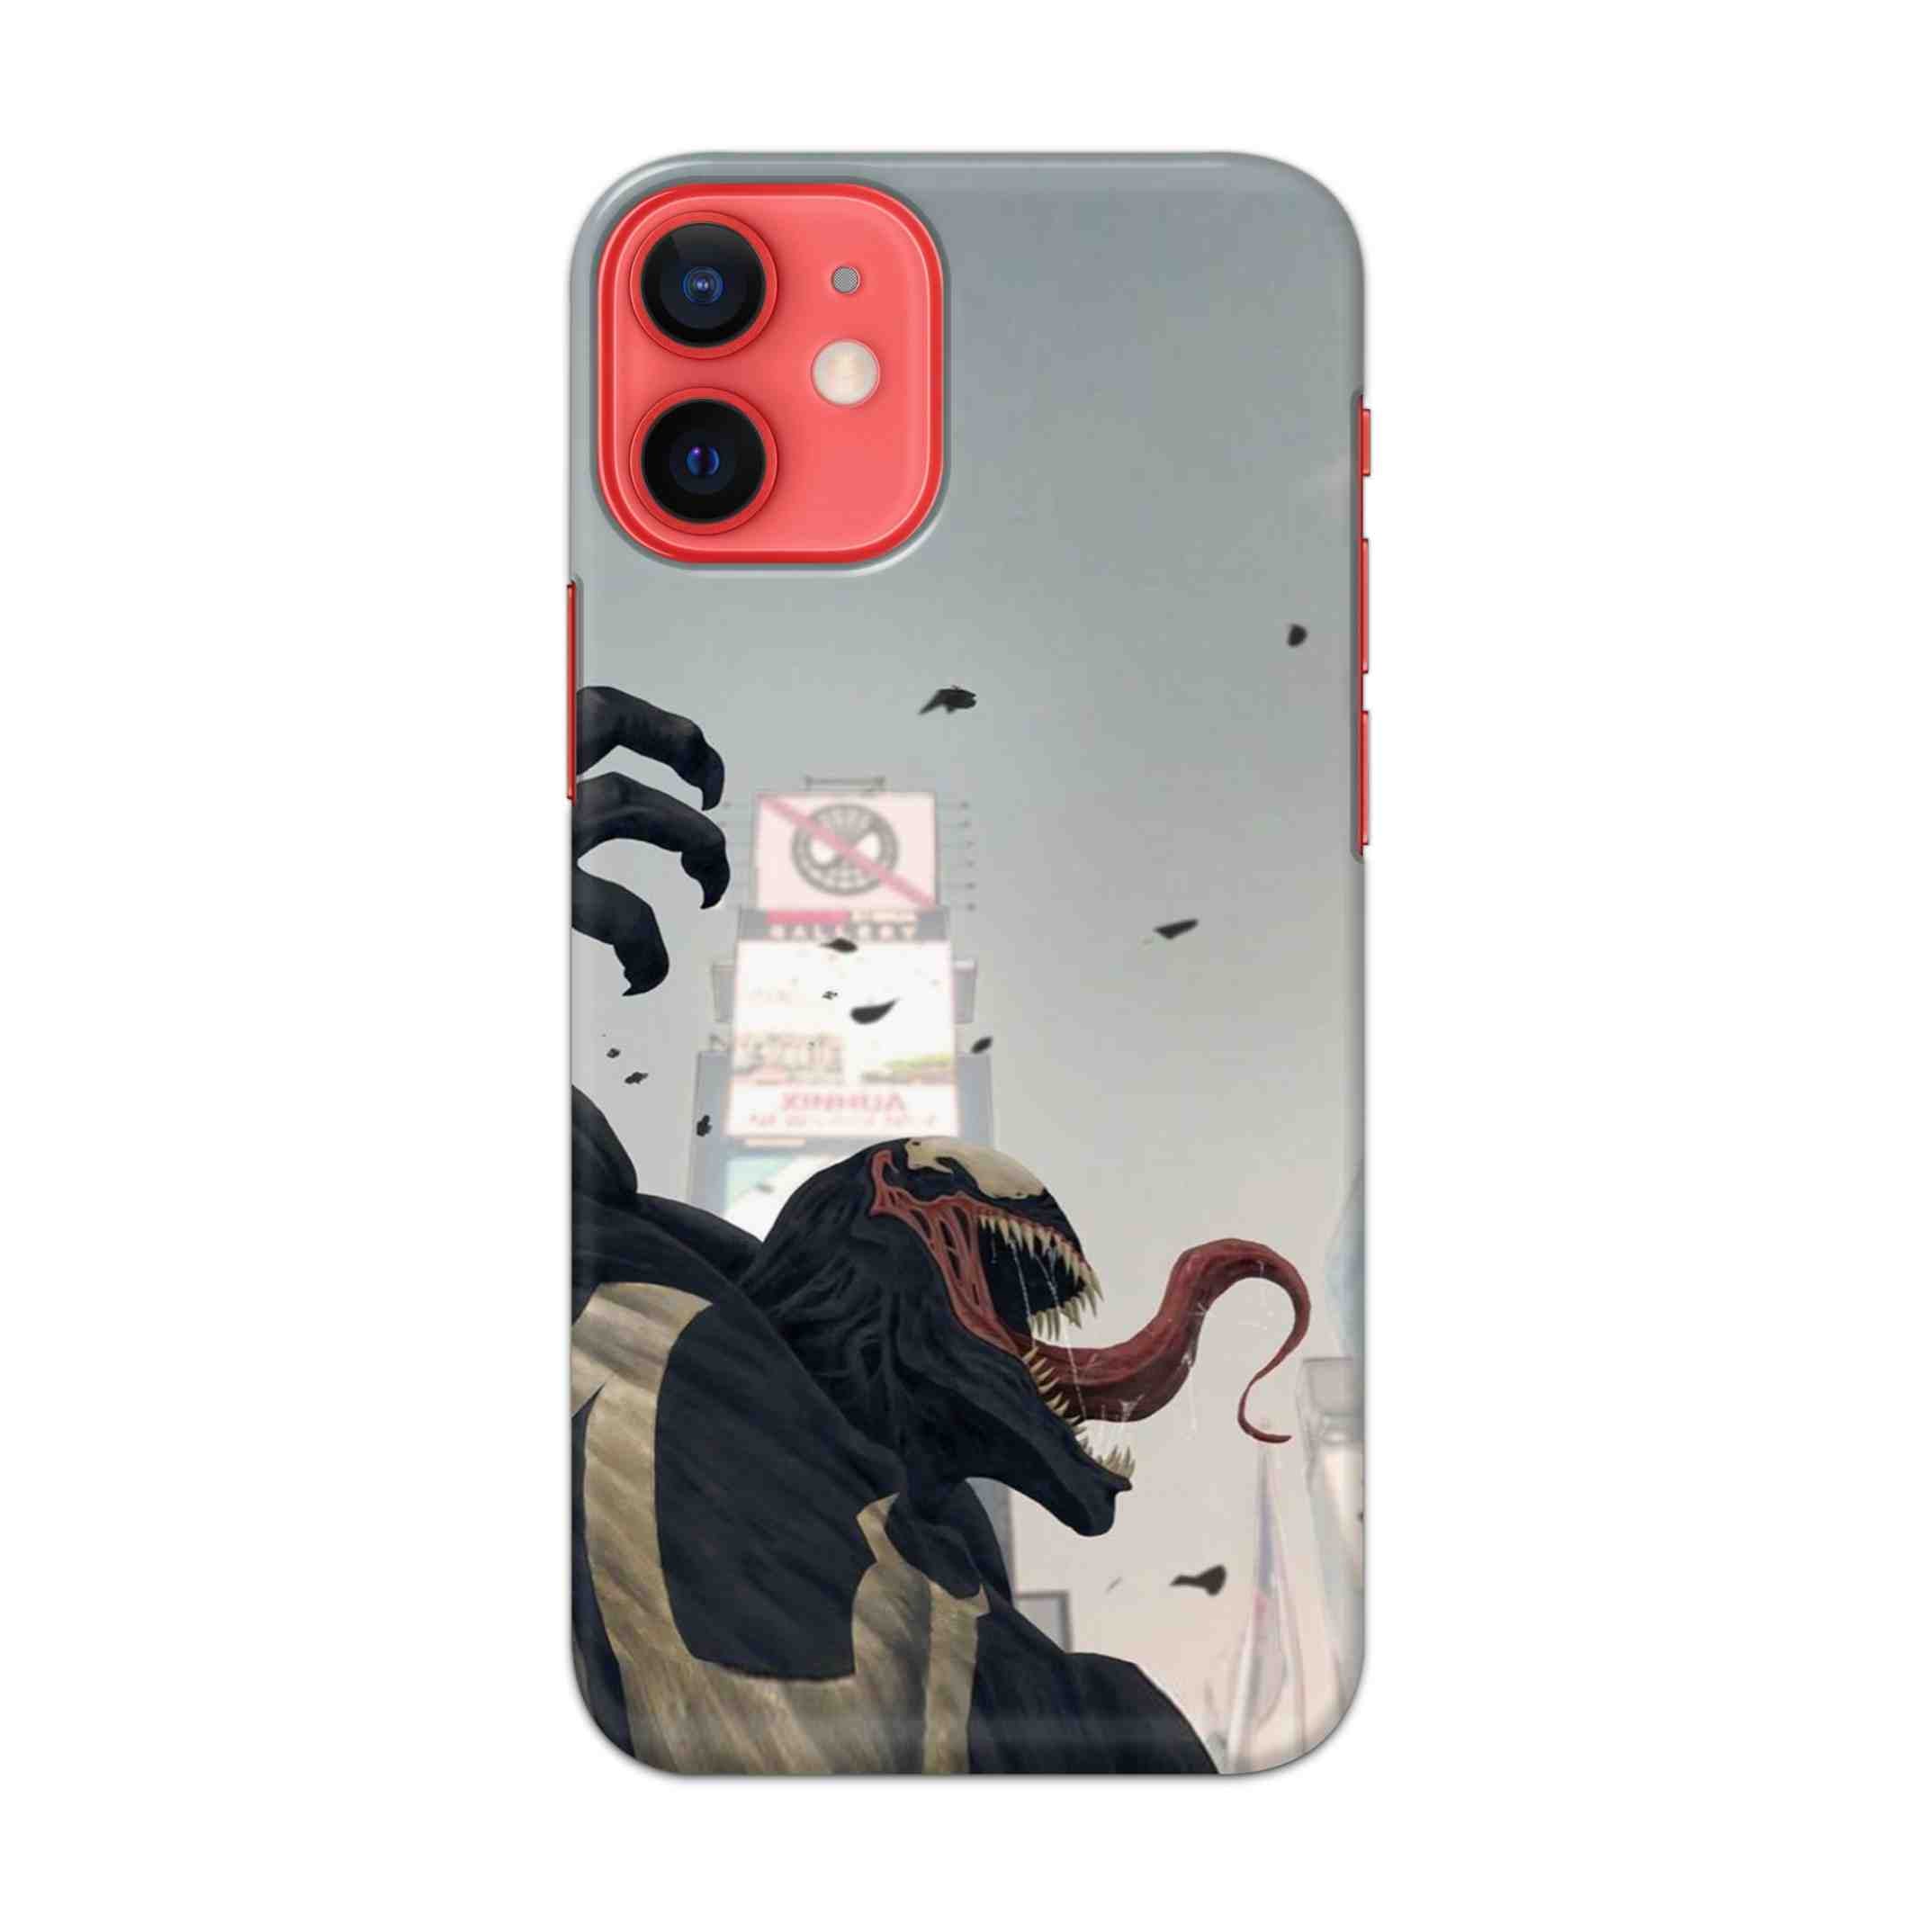 Buy Venom Crunch Hard Back Mobile Phone Case/Cover For Apple iPhone 12 mini Online